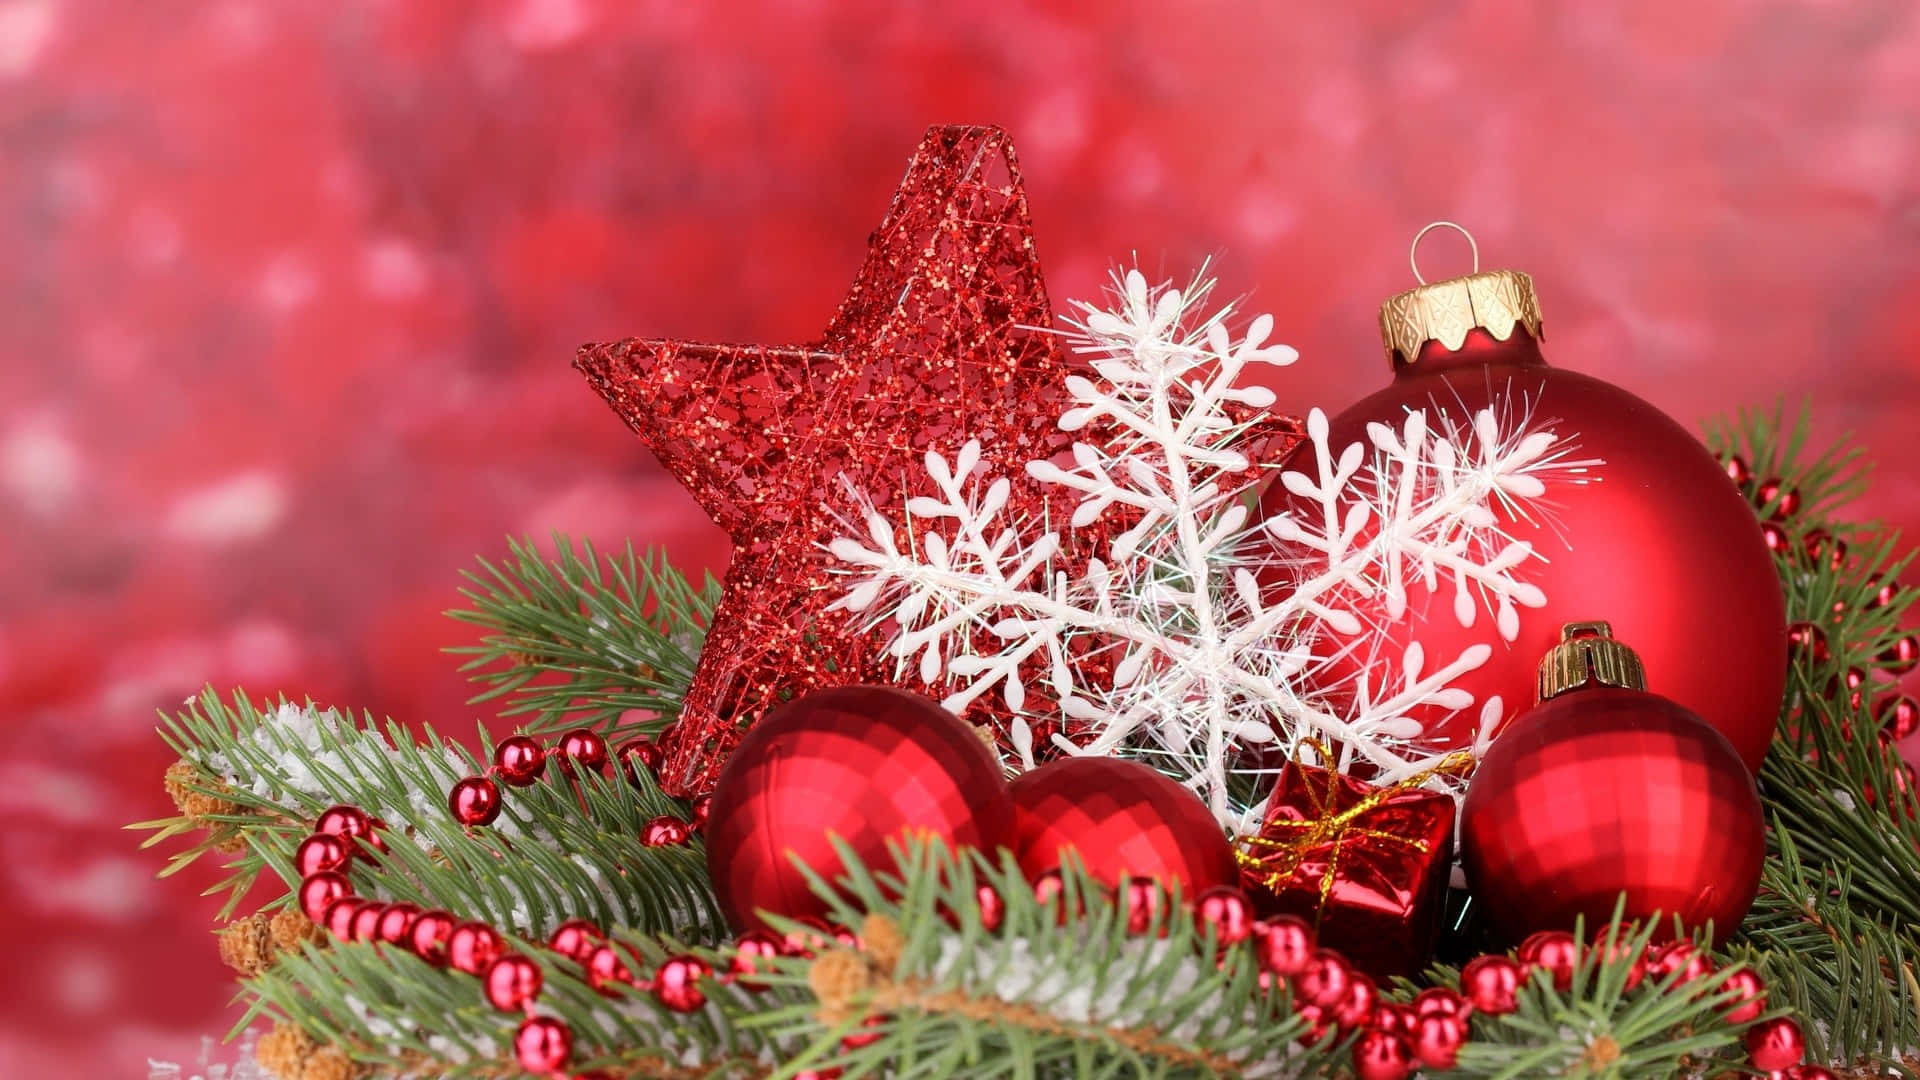 Celebrate the Holidays with a Festive Christmas Desktop